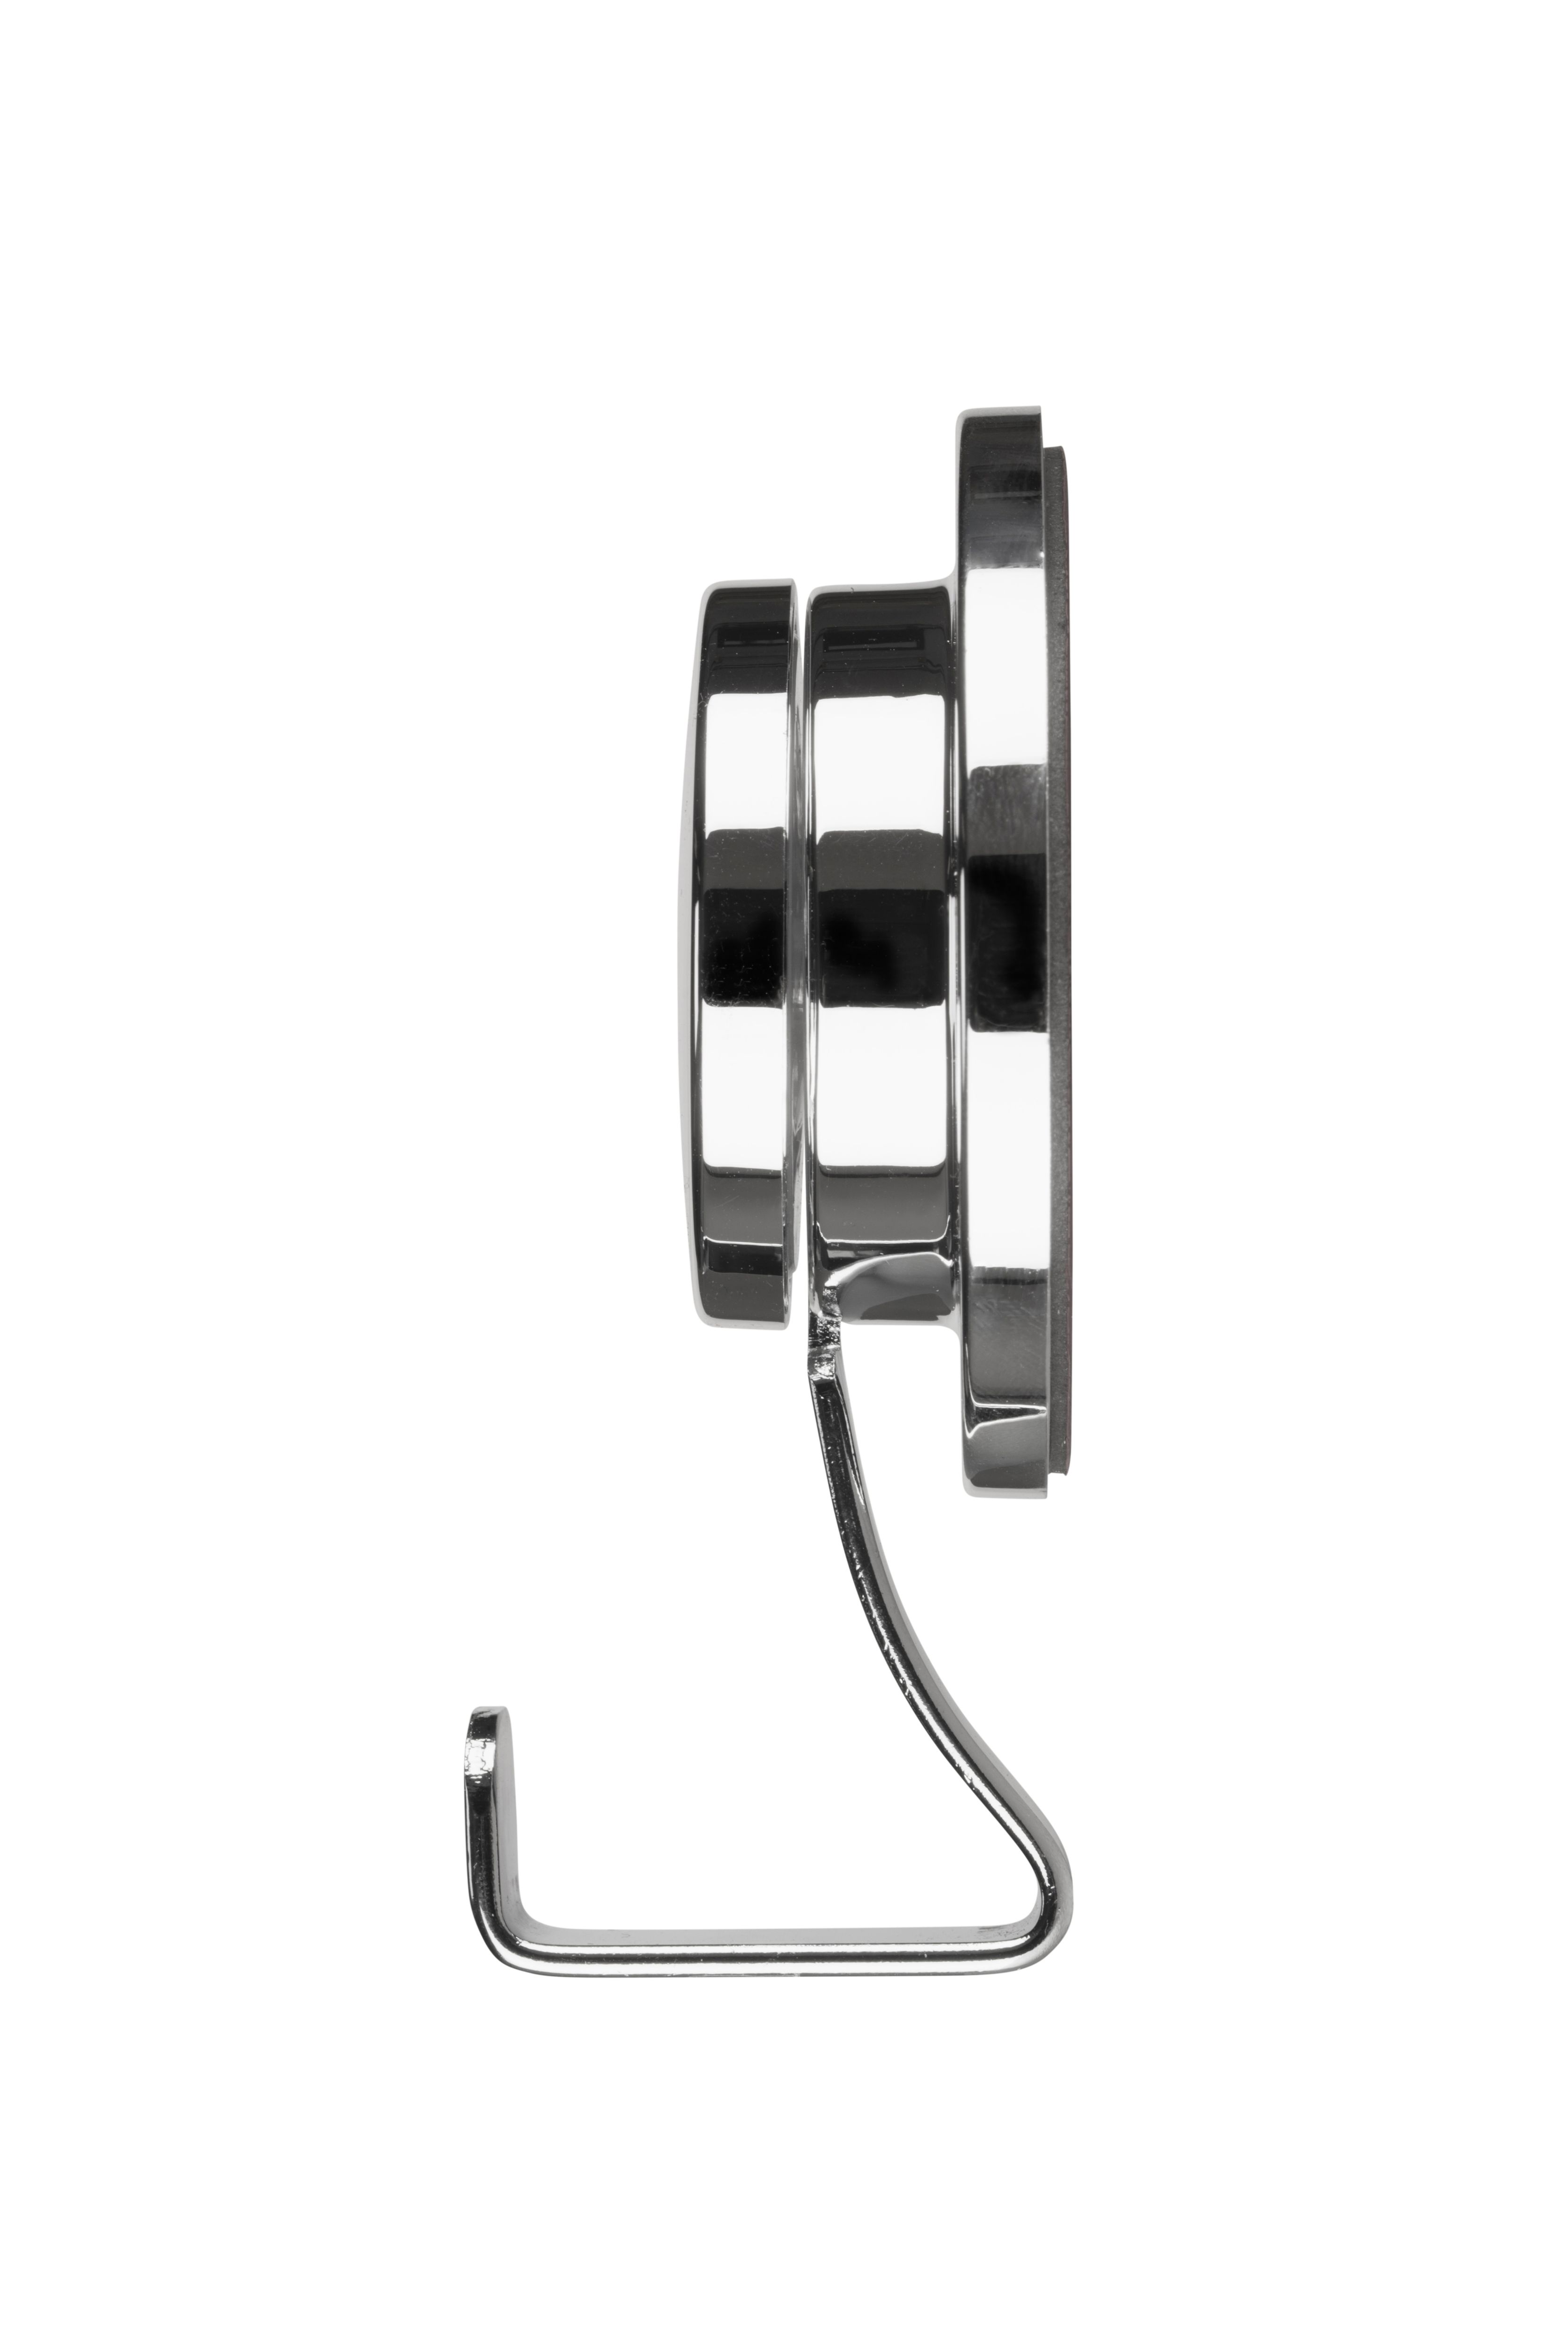 Croydex Chrome effect Steel Hook (Holds)2.5kg